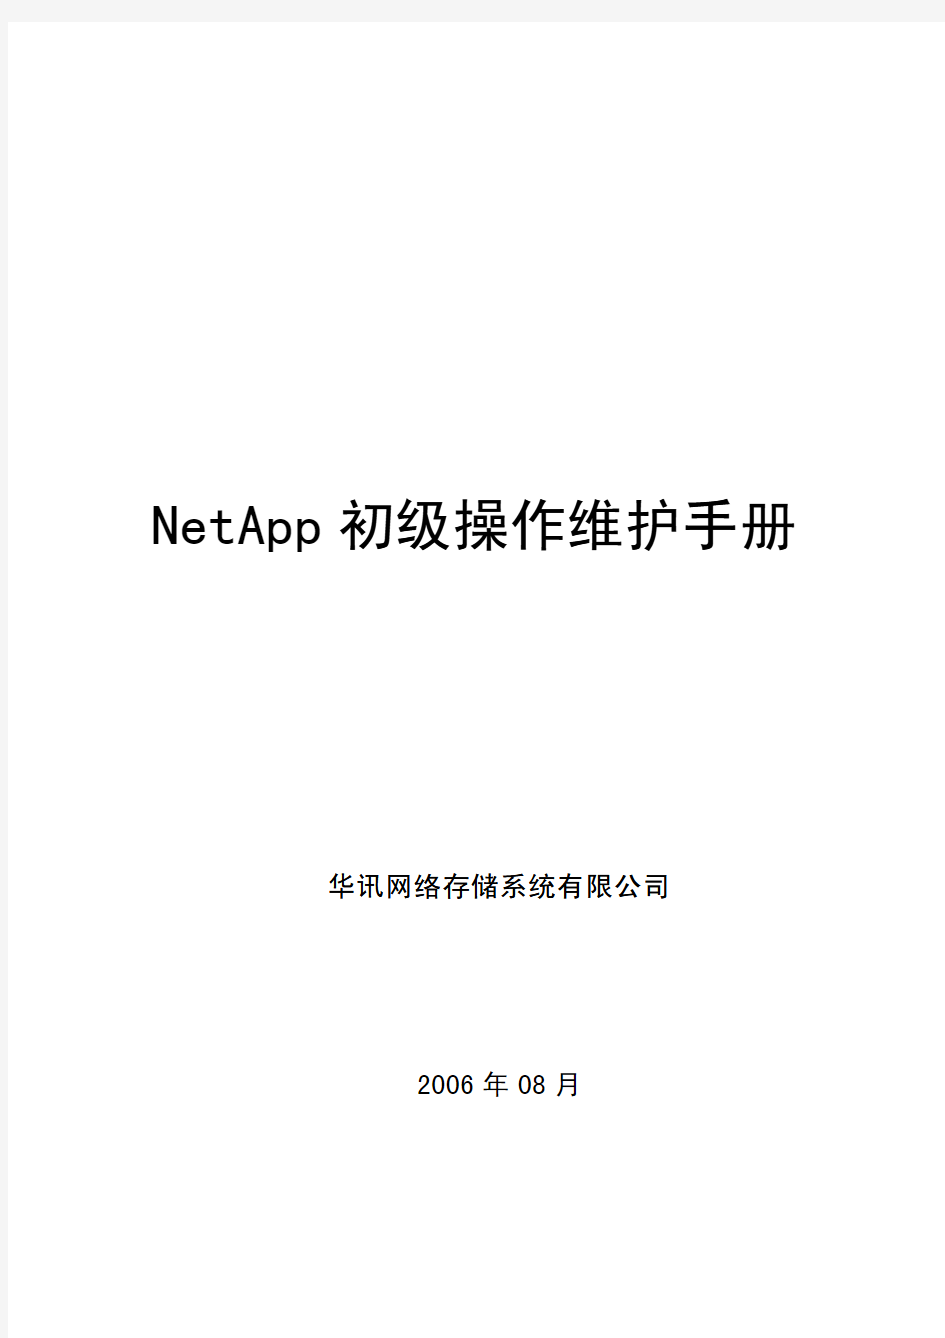 NetApp初级操作维护手册